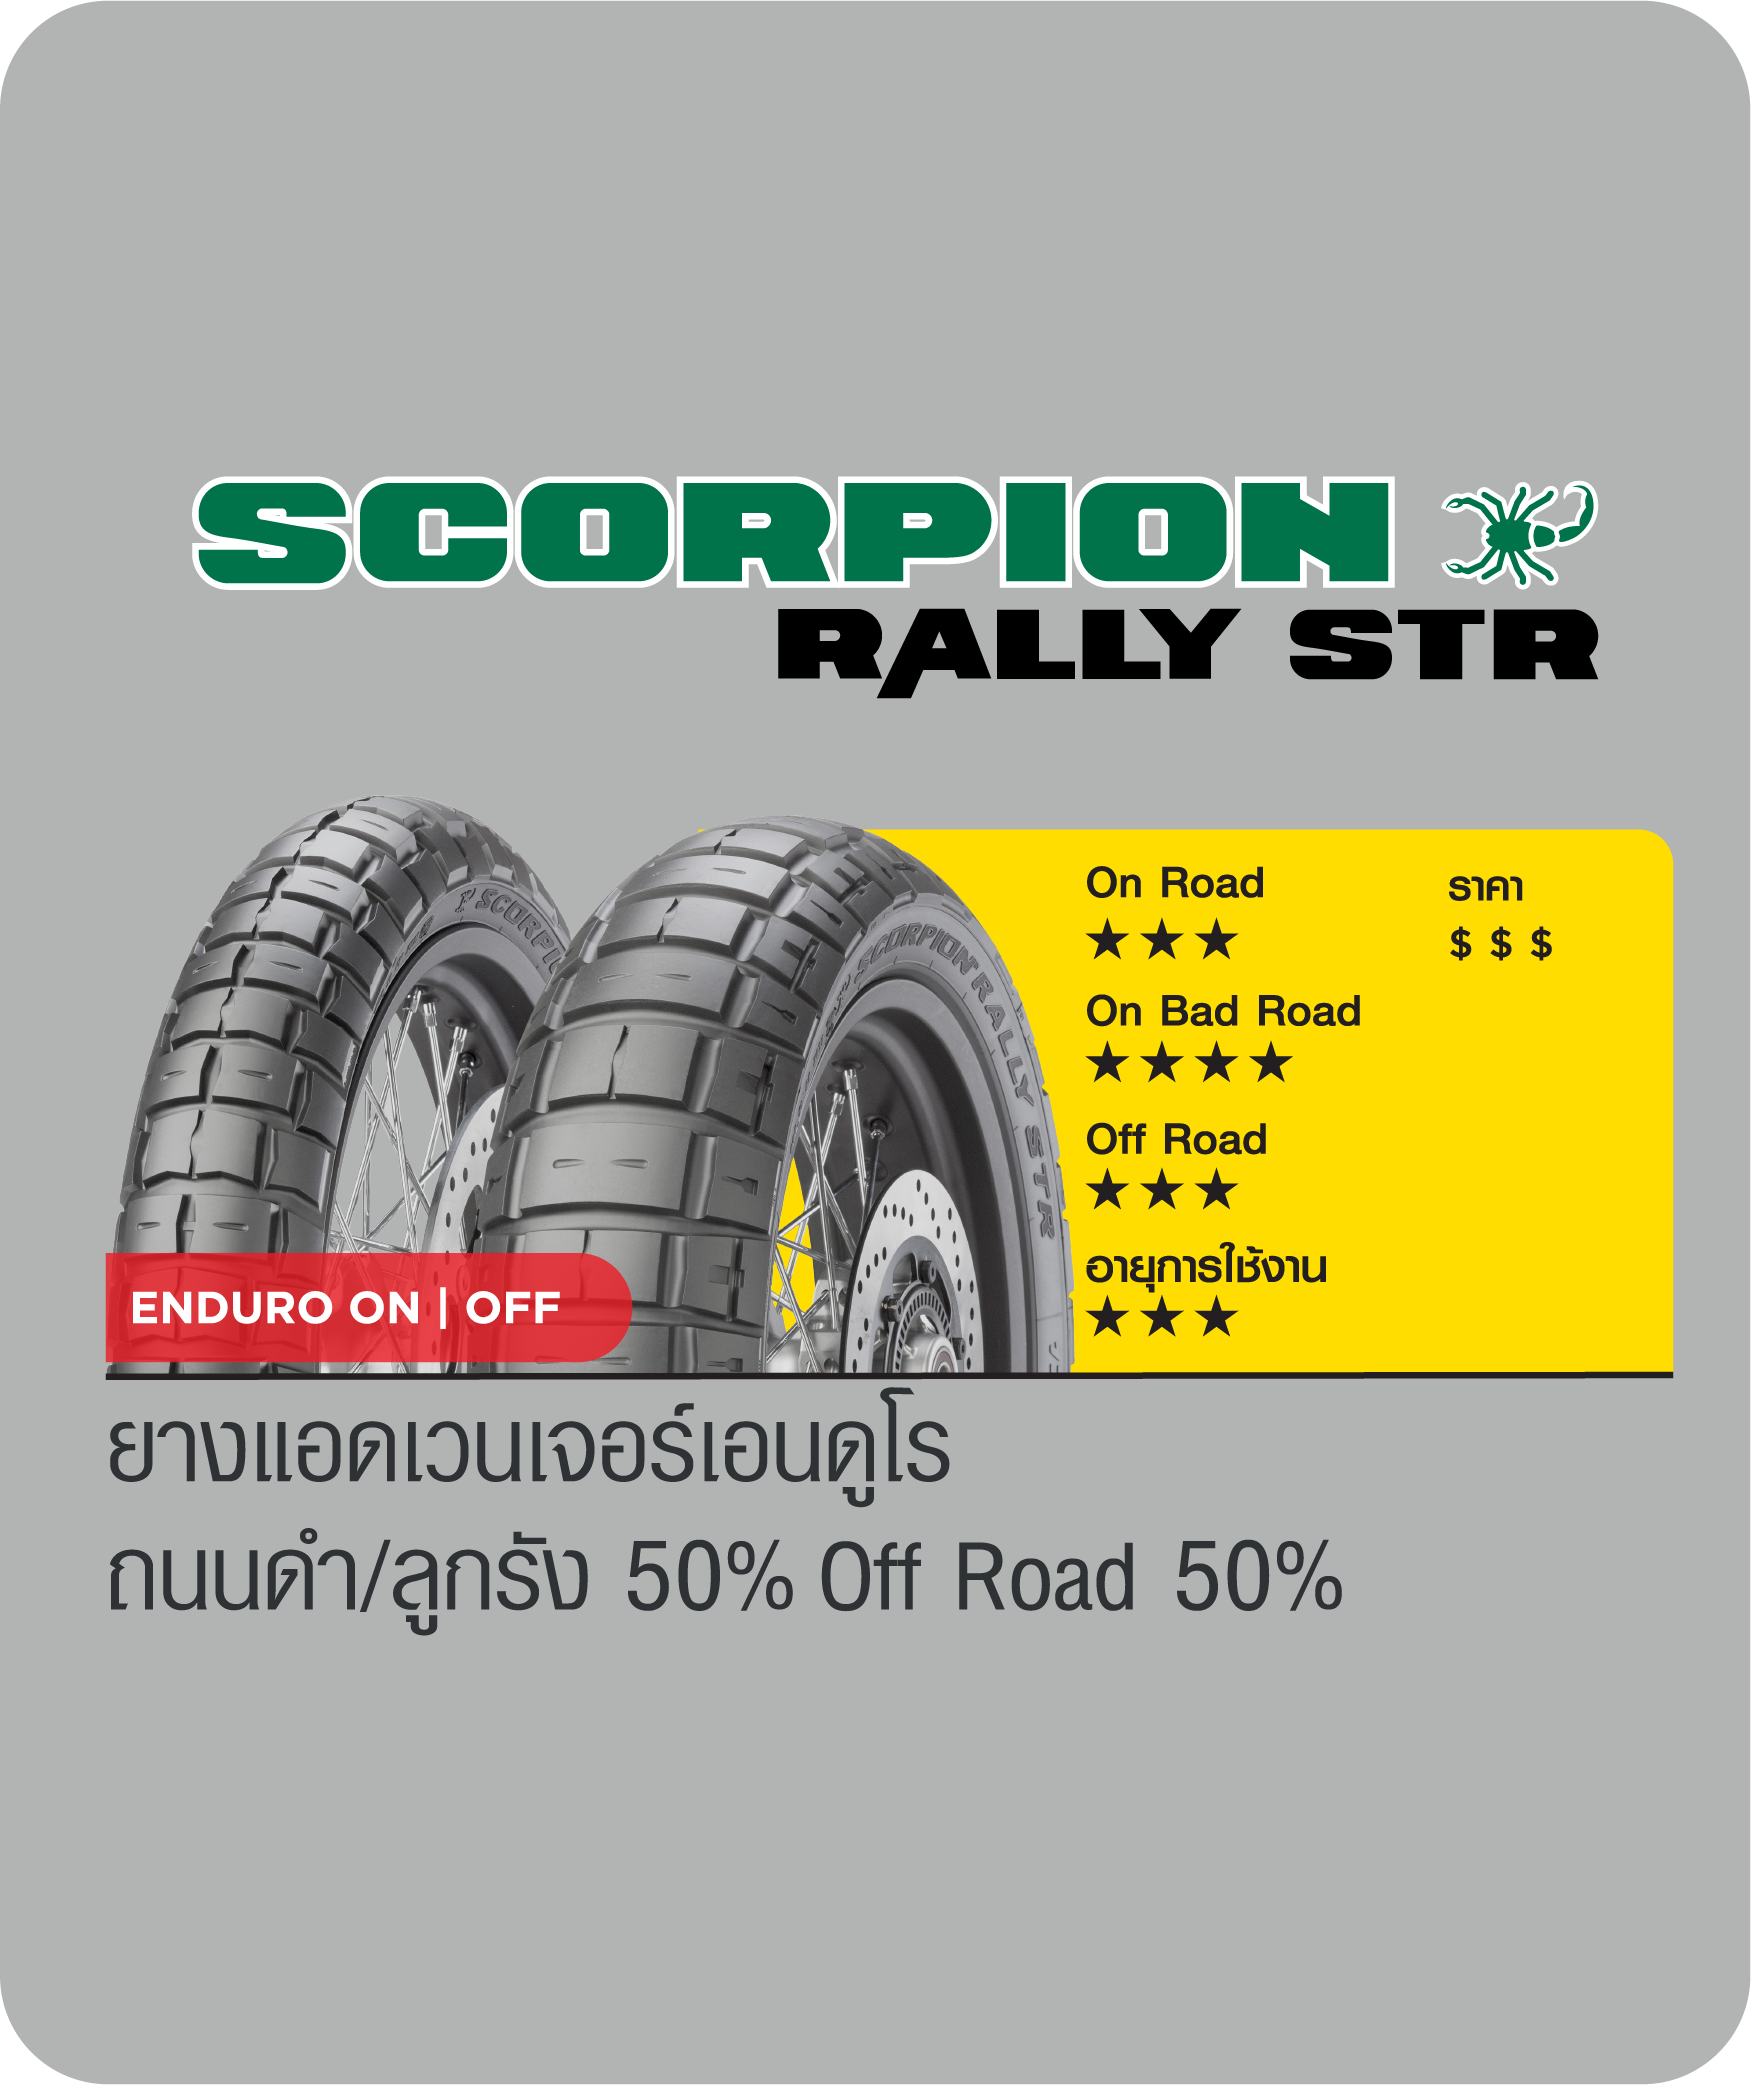 scorpion rally str